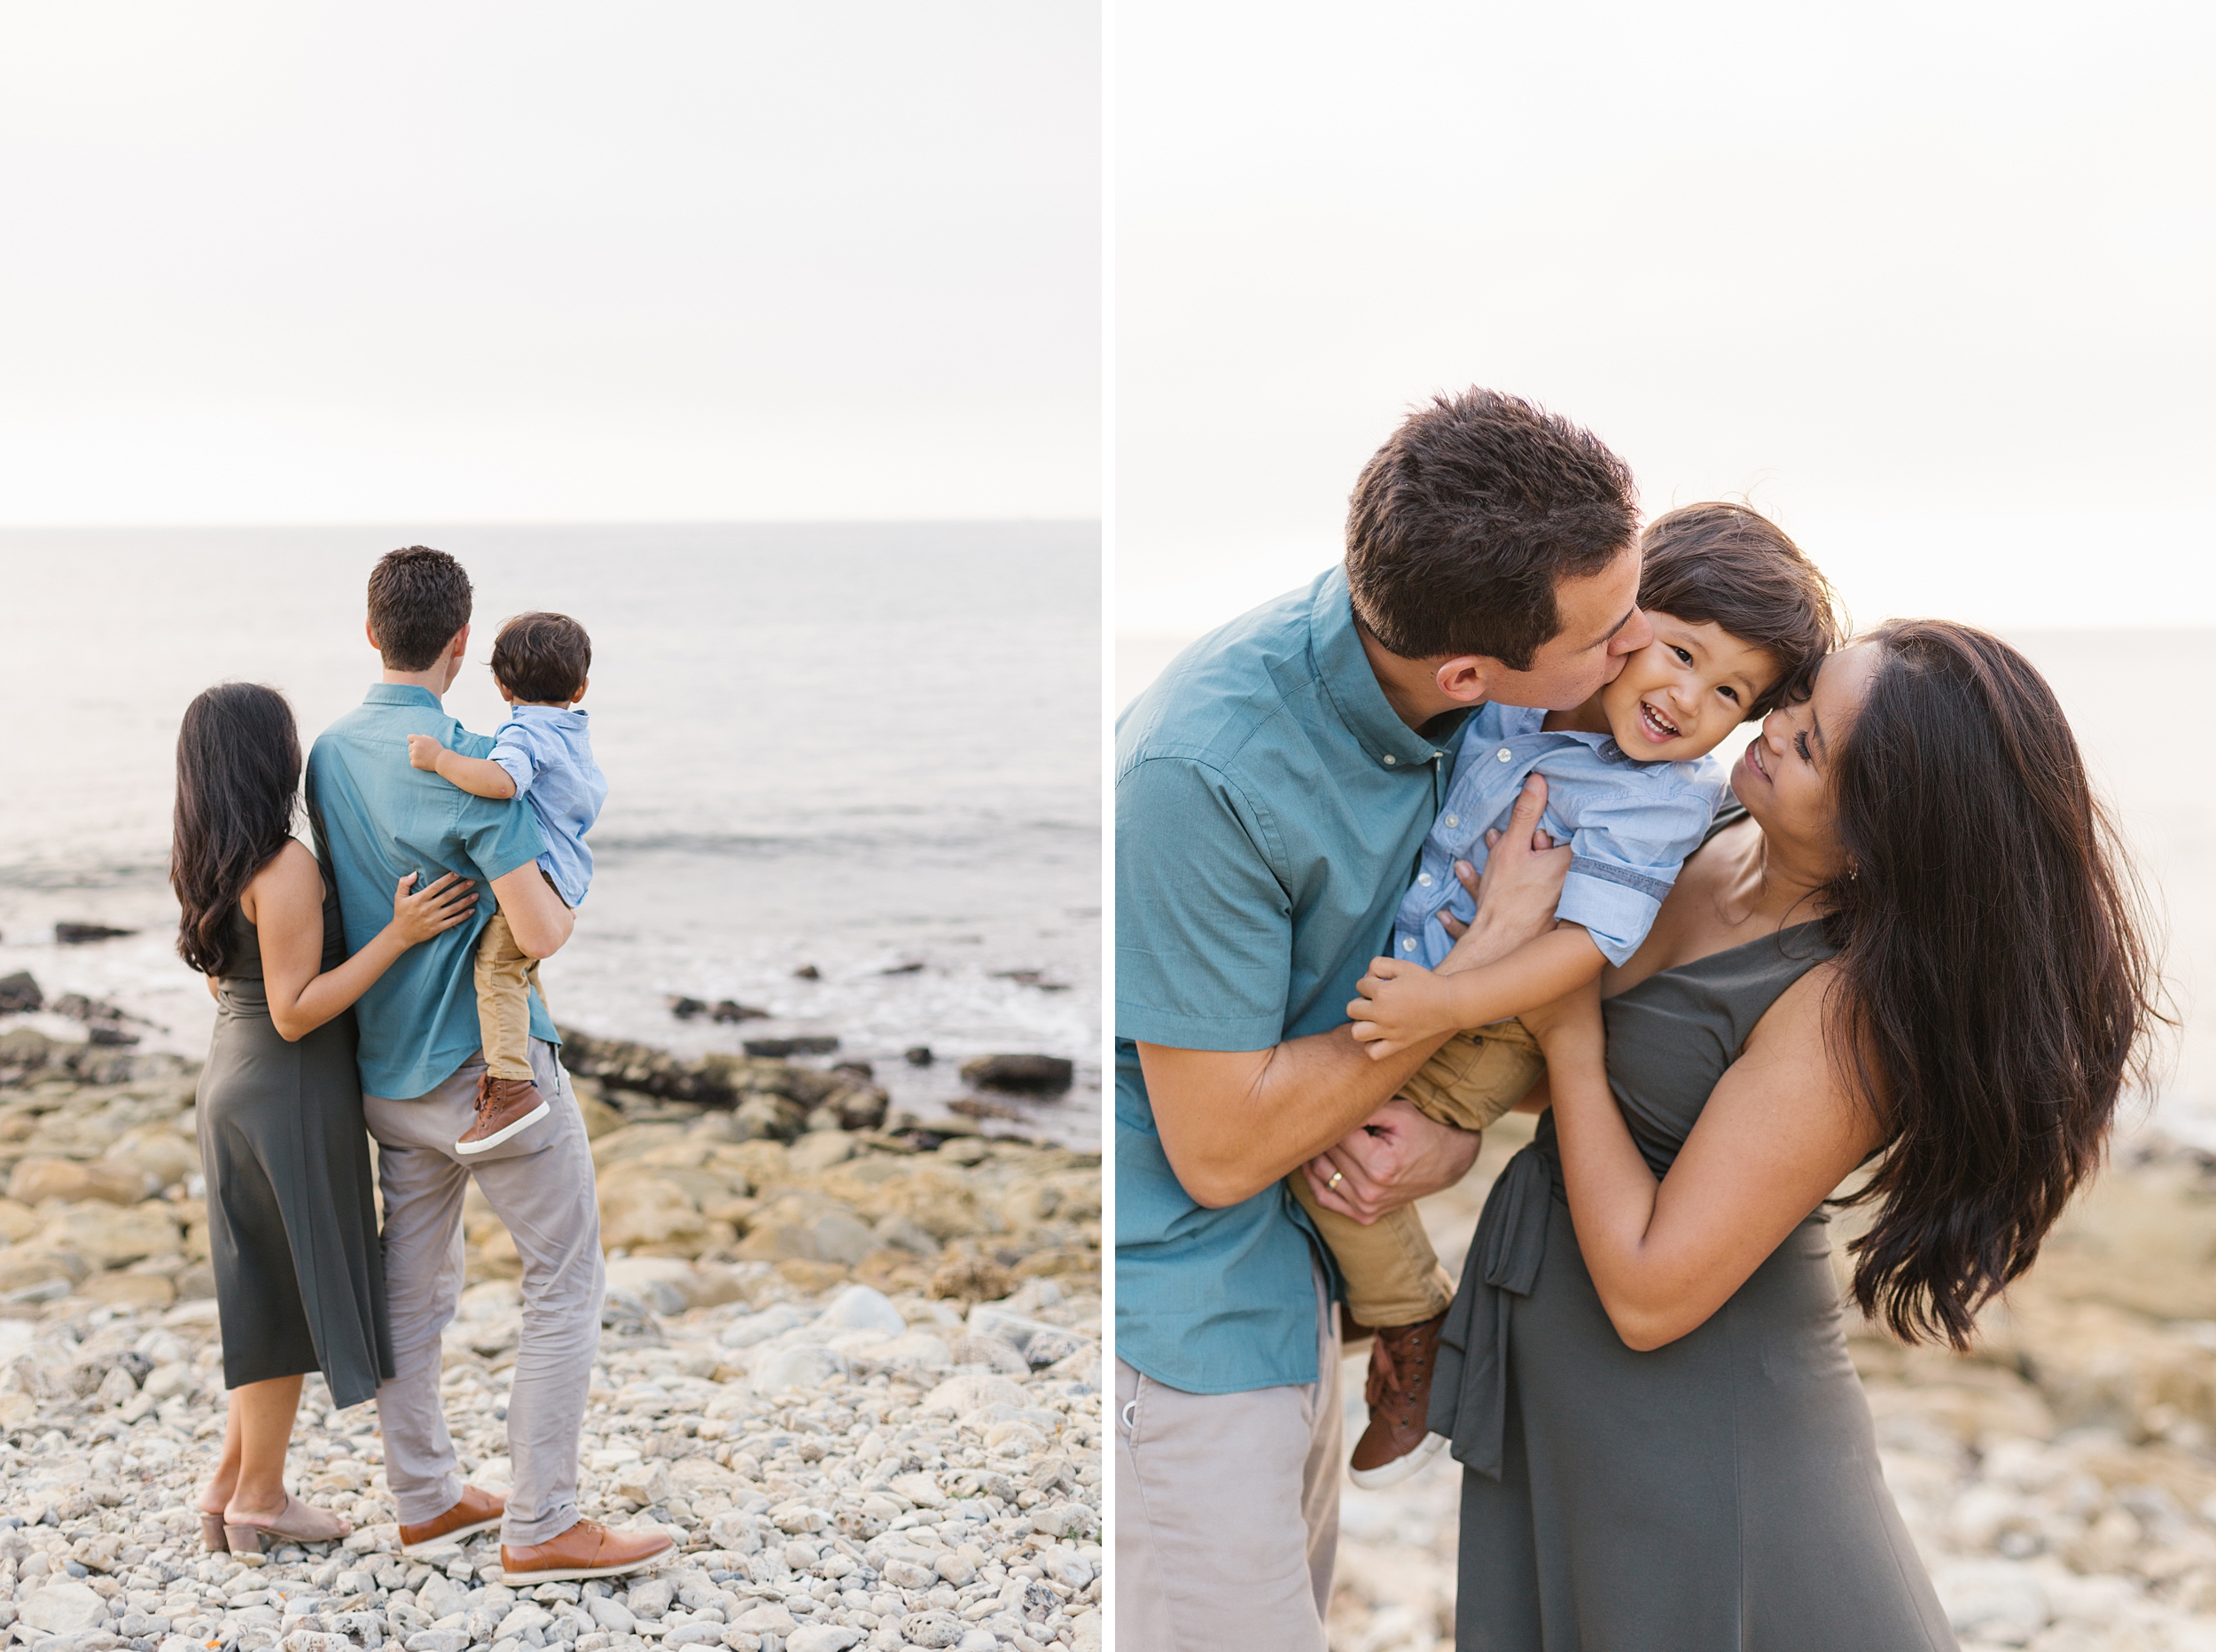 Palos Verdes family photography session at Malaga Cove beach